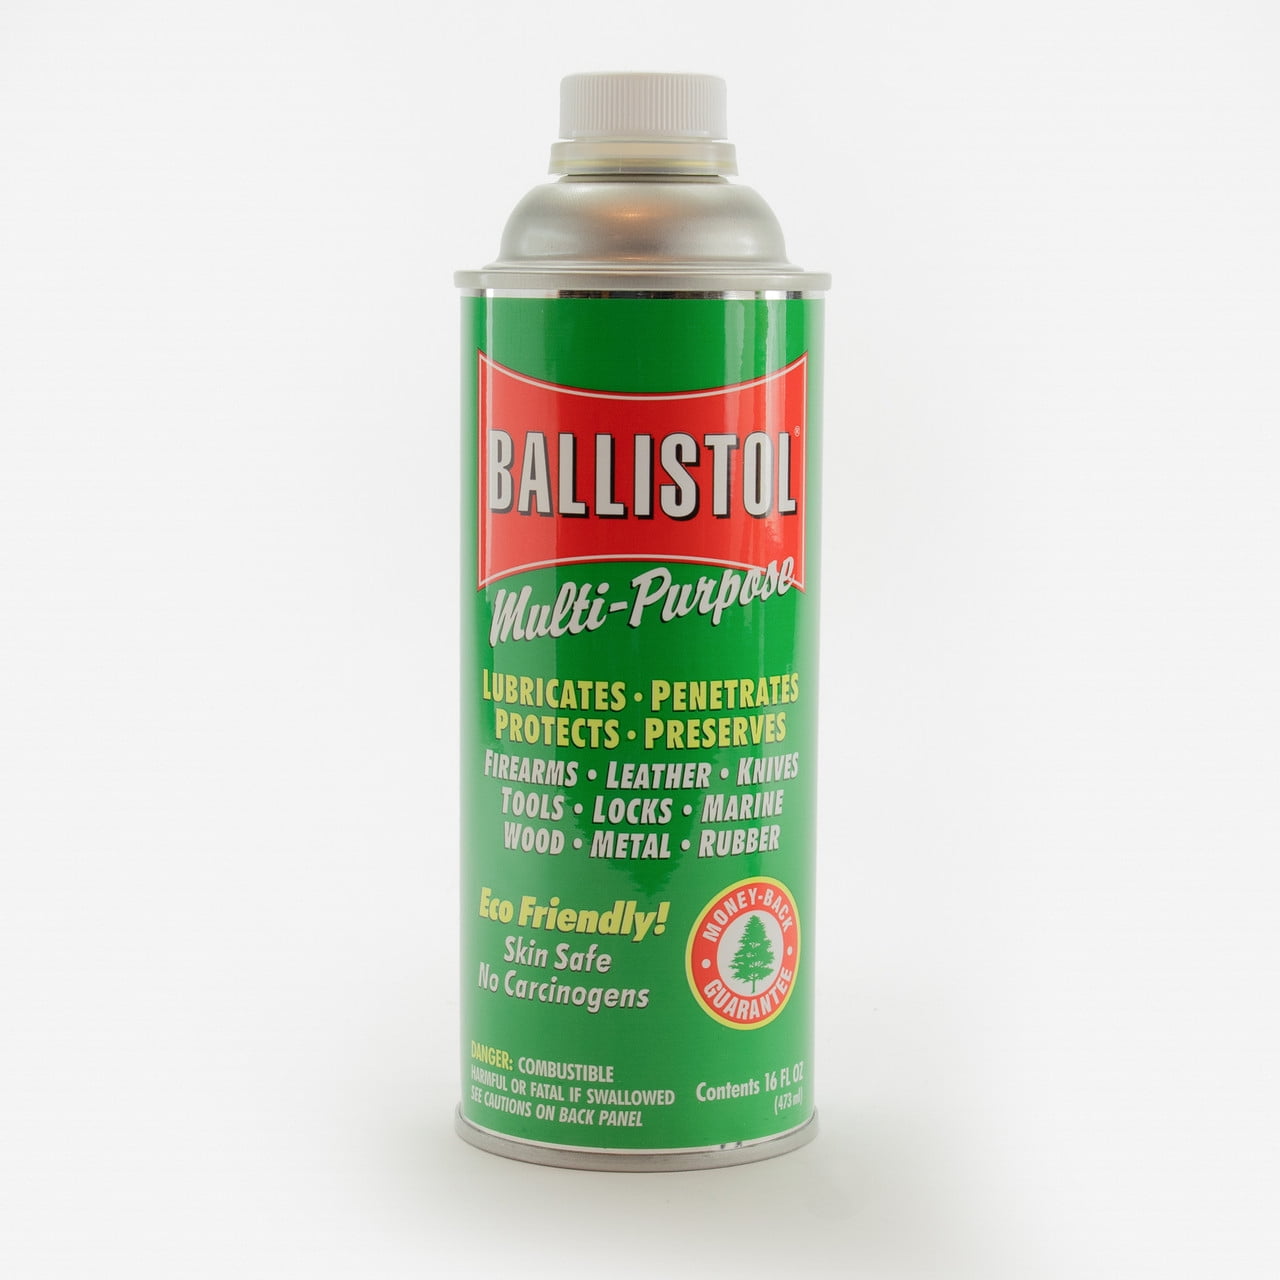 Lubrifiant solide PTFE Spray Ballistol 200 ml - HORNBACH Luxembourg